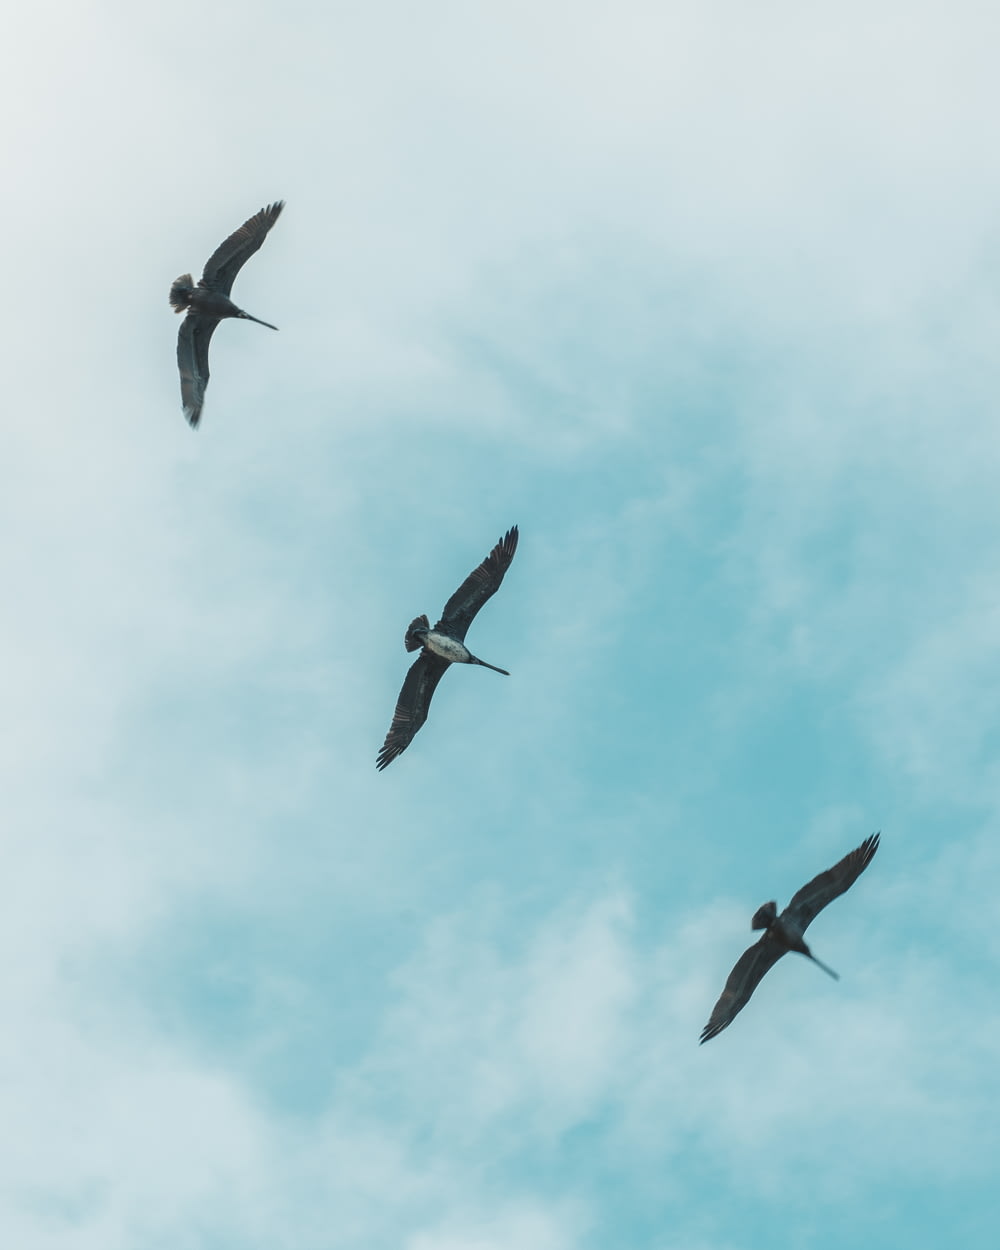 three bird flying on air during daytime